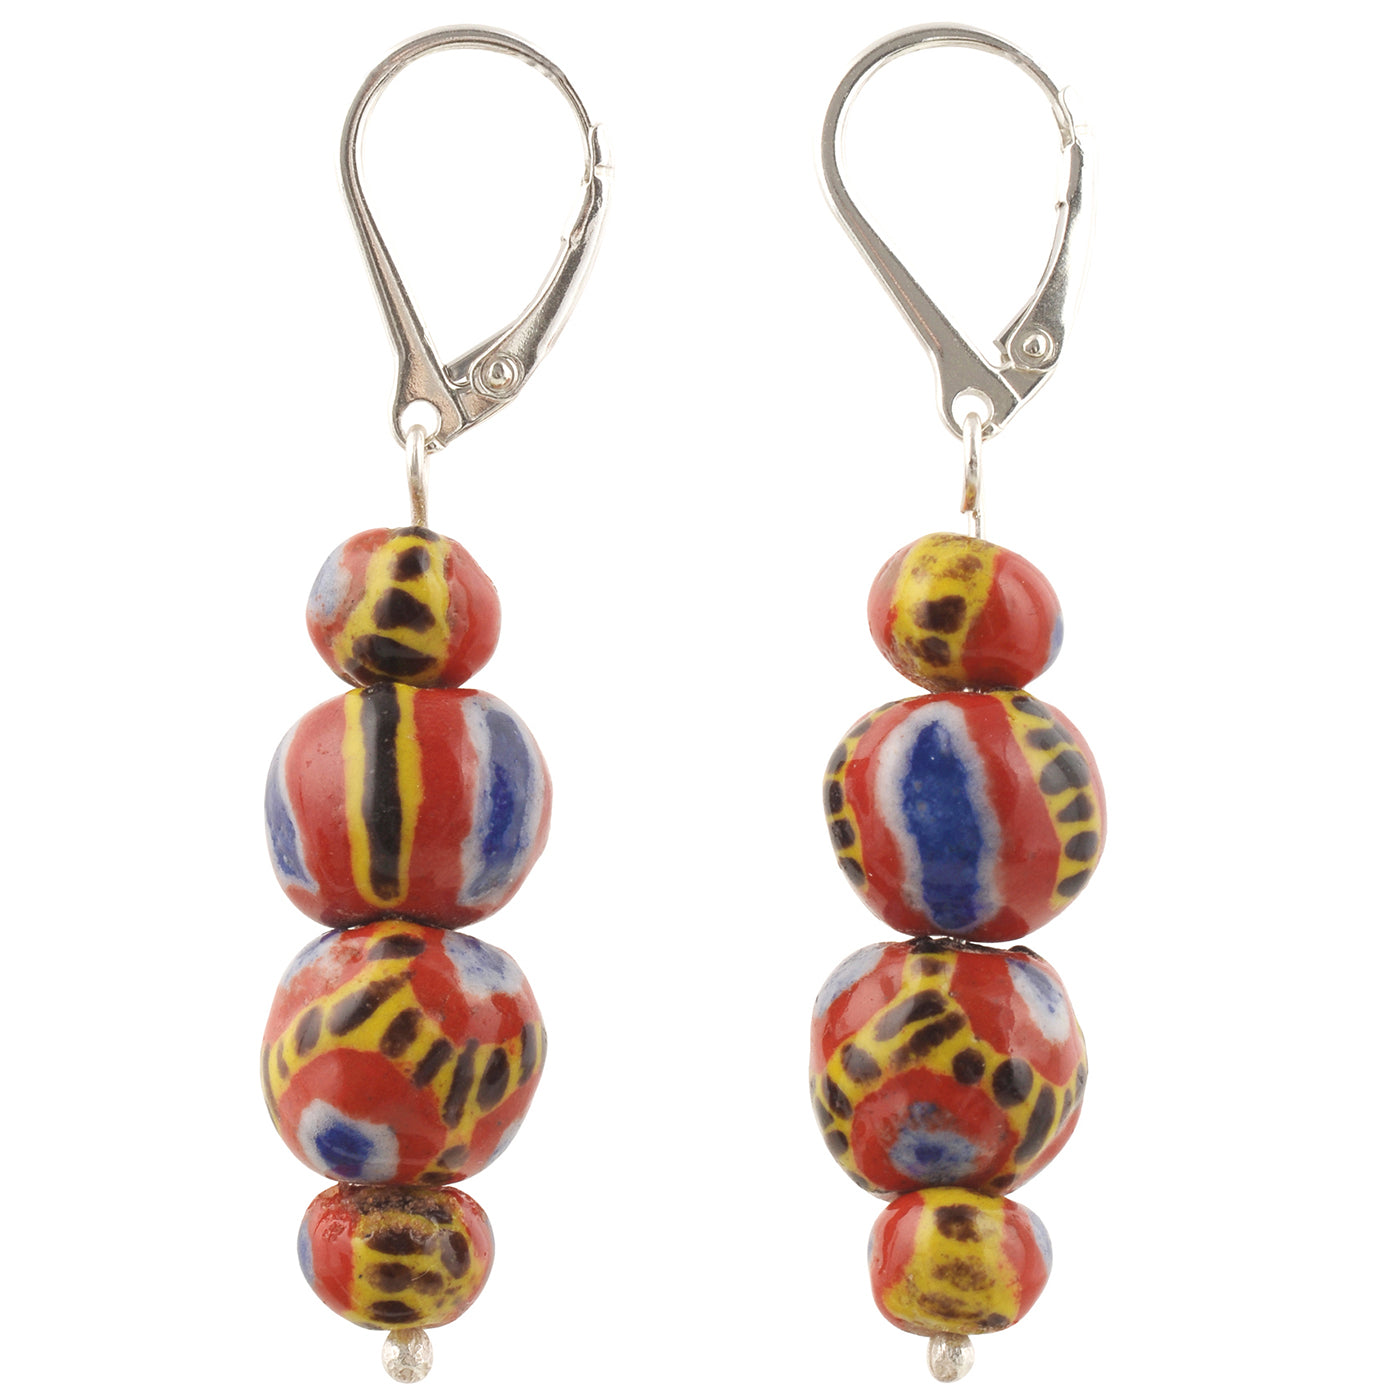 Handmade Kiffa glass beads earrings 925 sterling silver African Ethnic Jewelry - Tribalgh